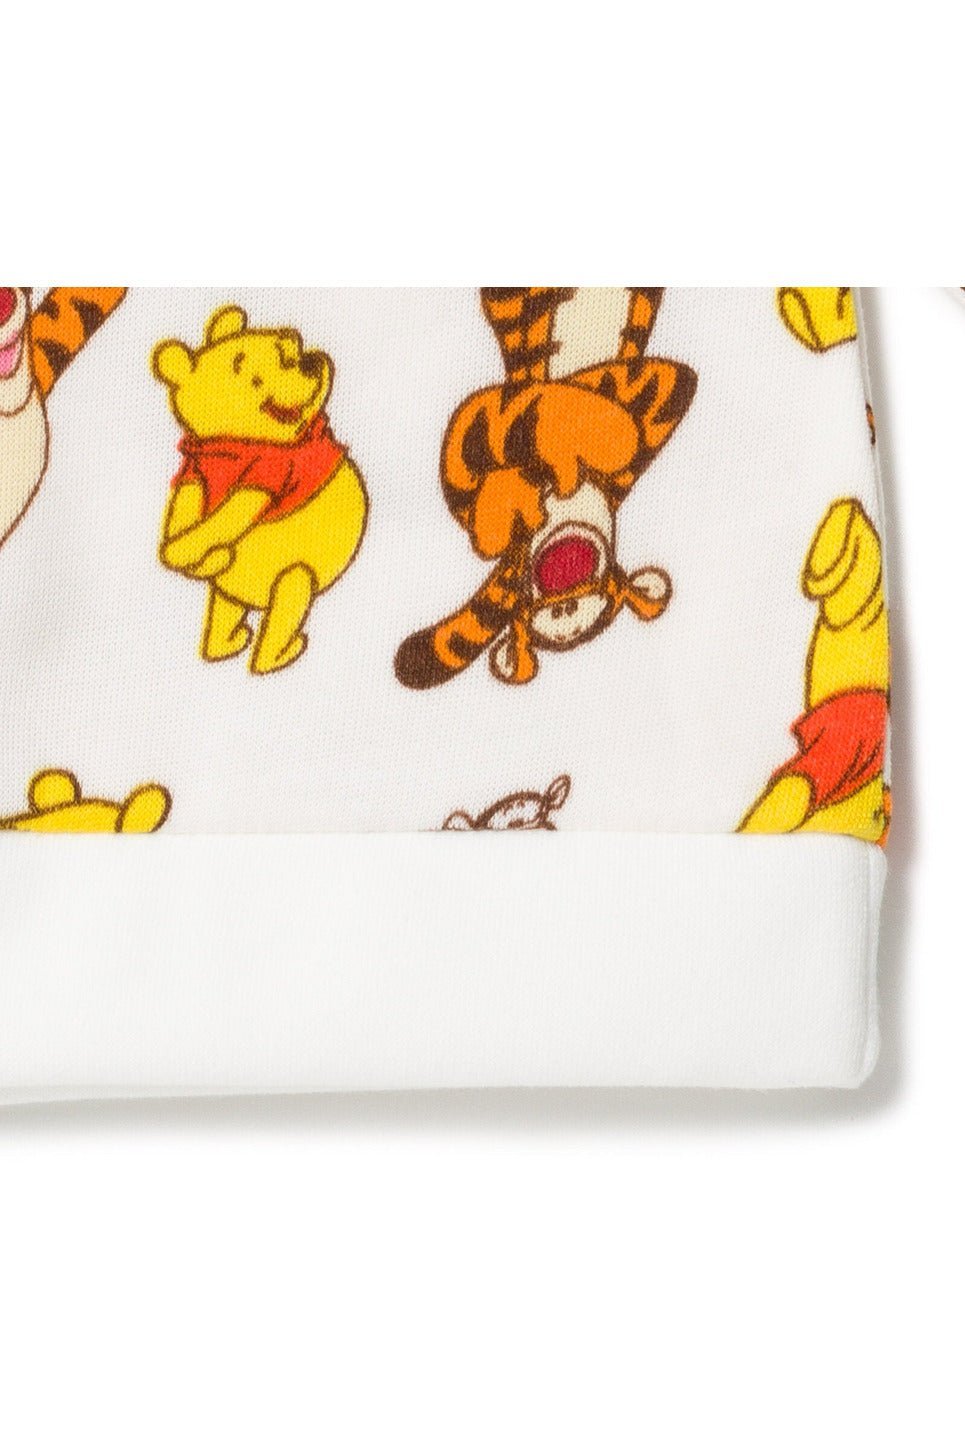 Disney Winnie the Pooh Tigger Fleece Pullover Sweatshirt and Pants Set Newborn to Toddler - imagikids